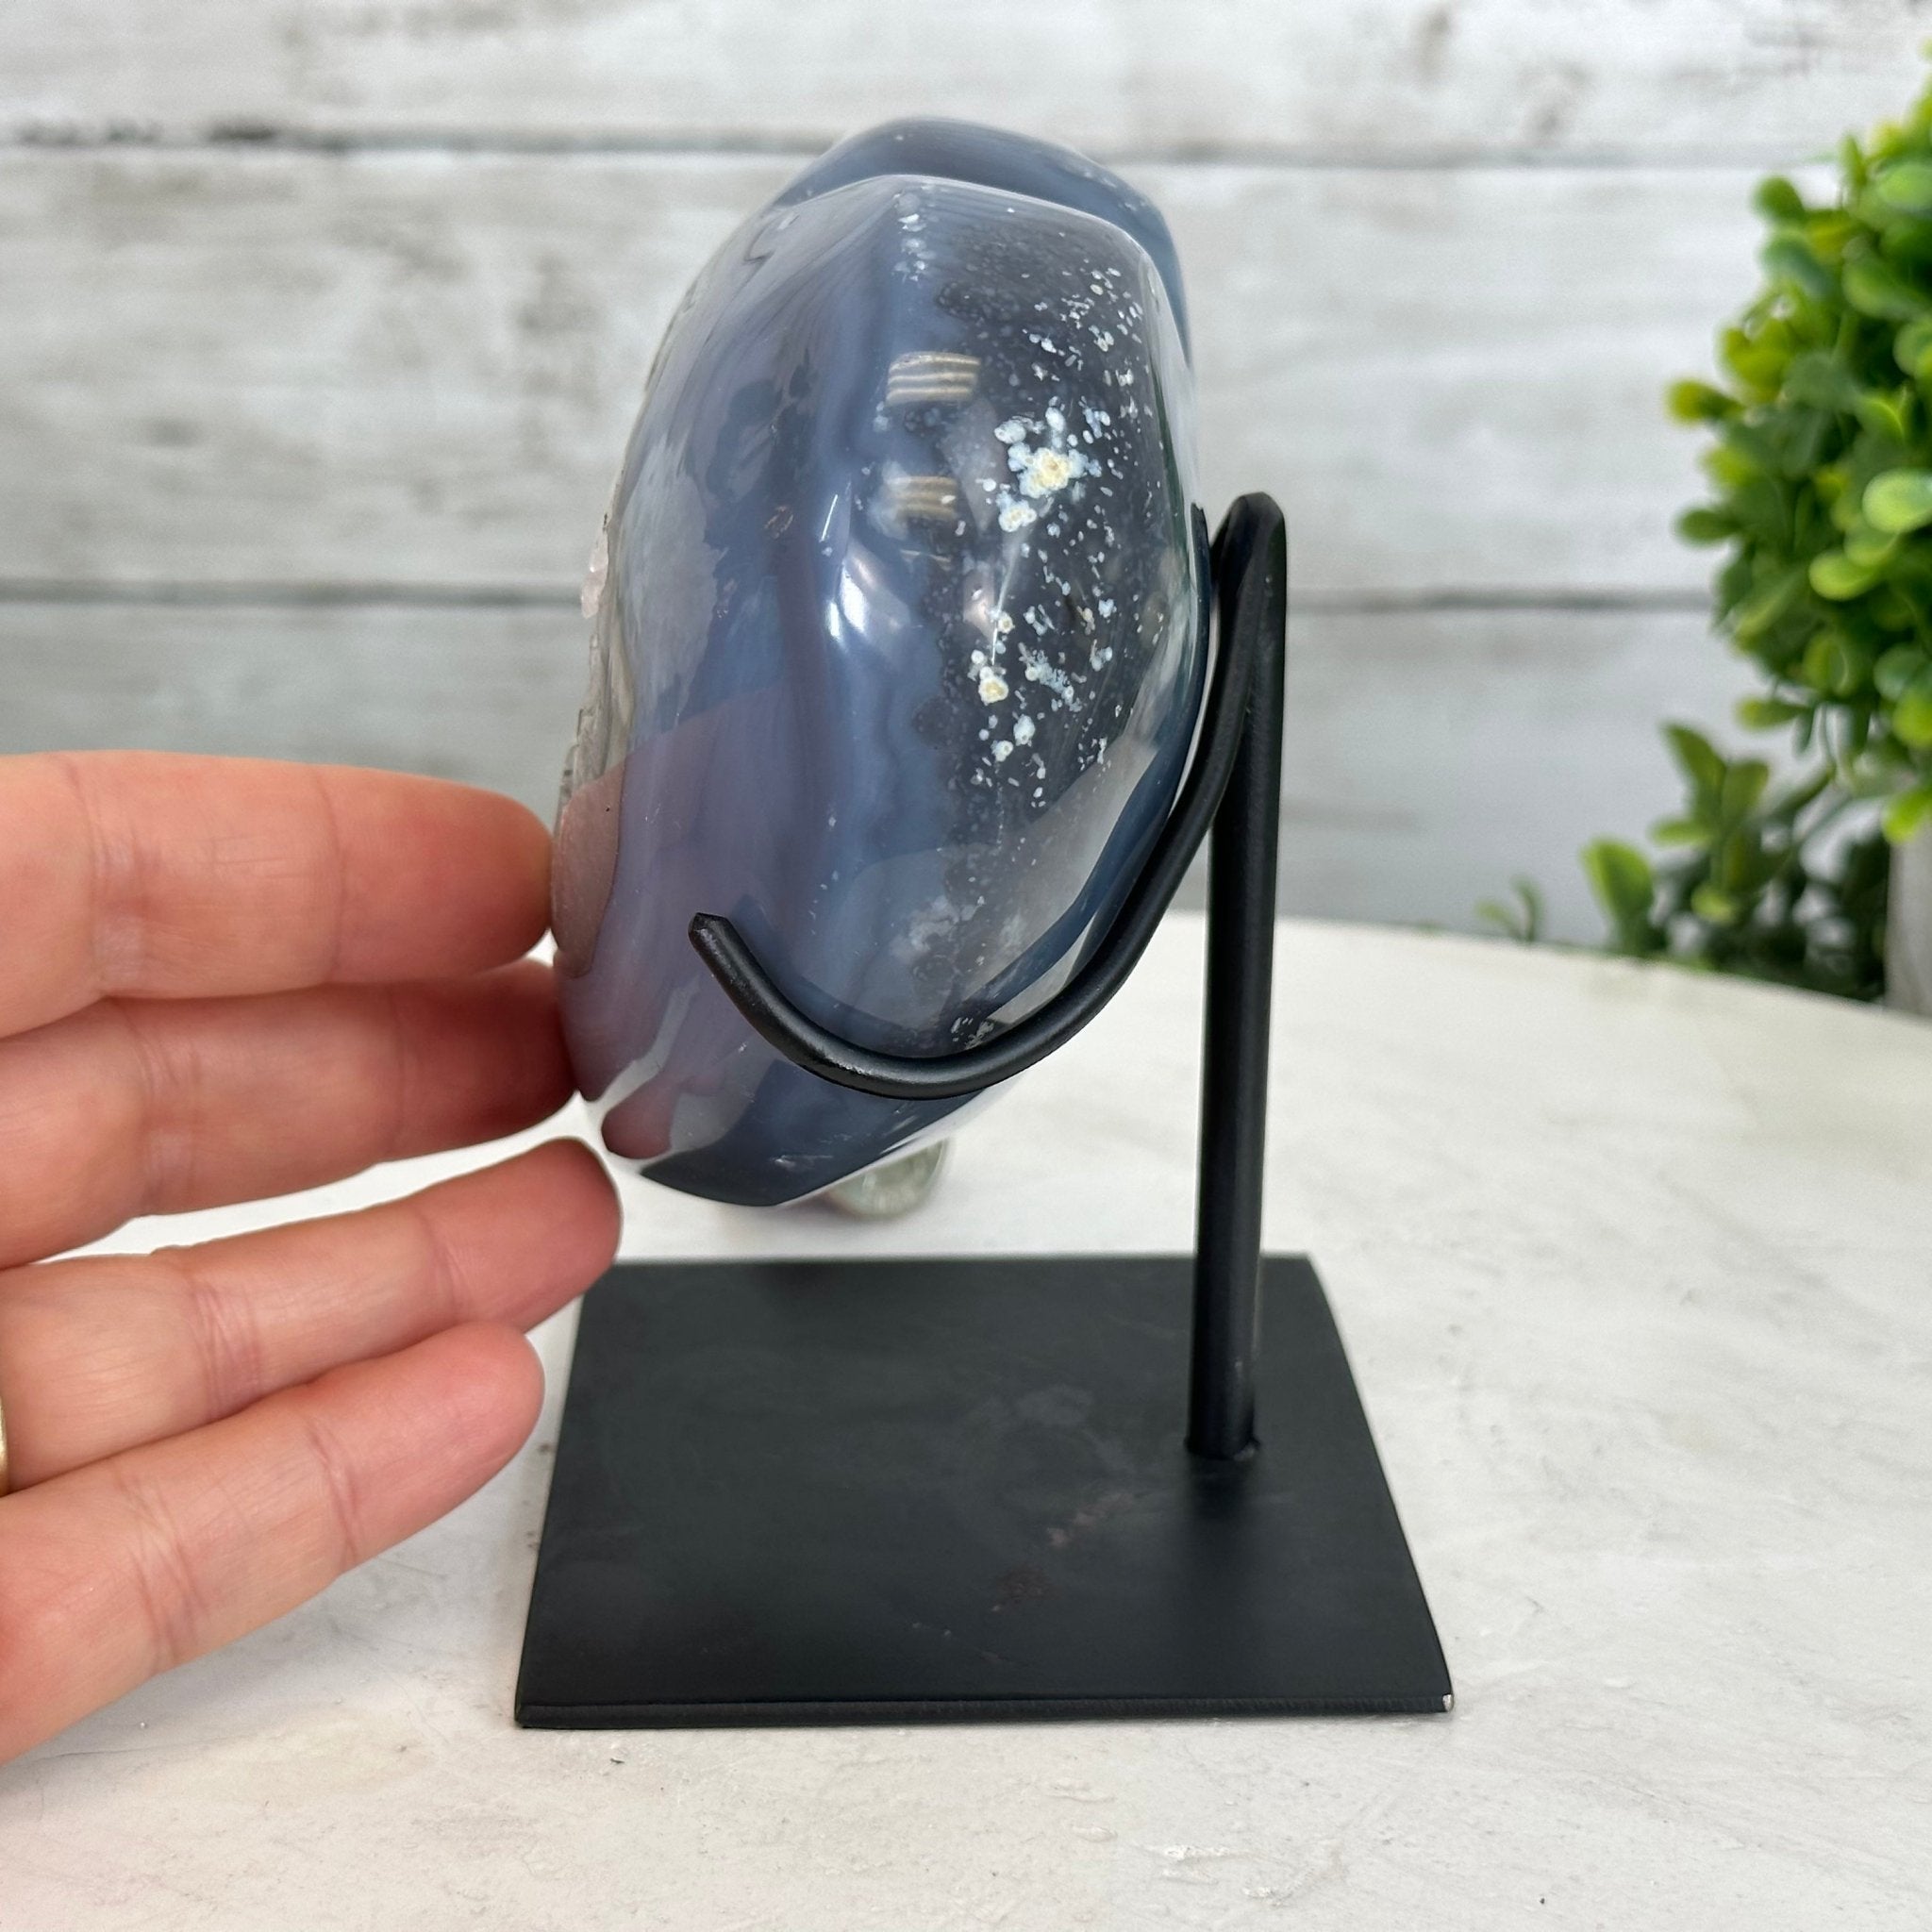 Polished Agate Heart Geode on a Metal Stand, 2.4 lbs & 5.2" Tall, Model #5468-0062 by Brazil Gems - Brazil GemsBrazil GemsPolished Agate Heart Geode on a Metal Stand, 2.4 lbs & 5.2" Tall, Model #5468-0062 by Brazil GemsHearts5468-0062